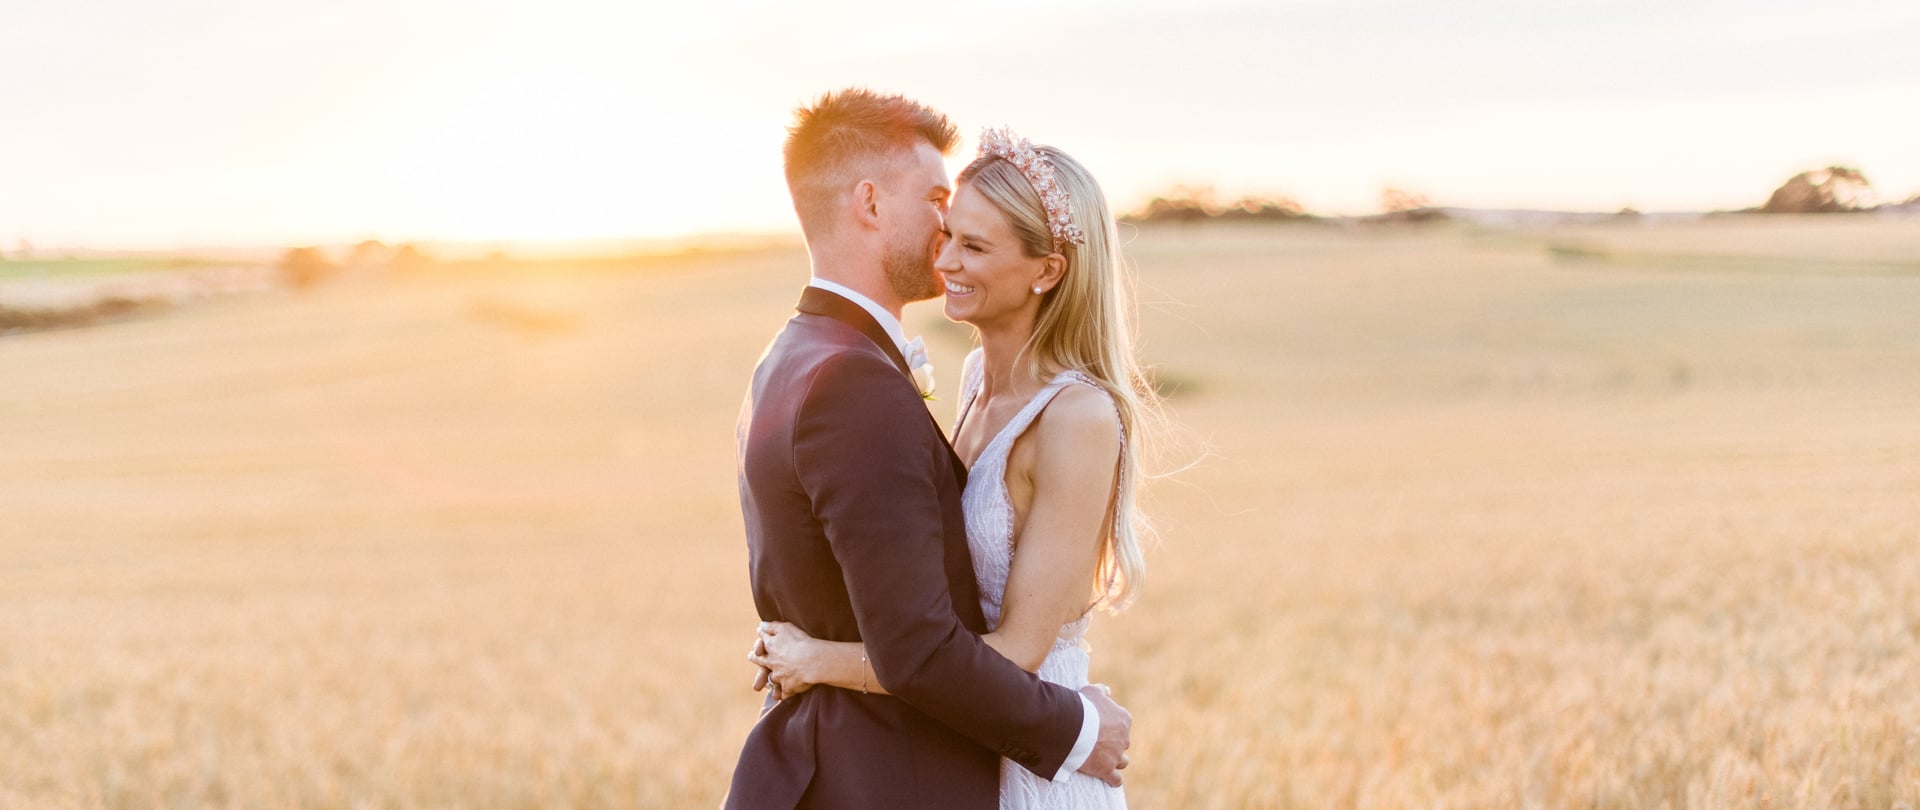 Lauren & Bryce Wedding Video Filmed atBarossa Valley,South Australia